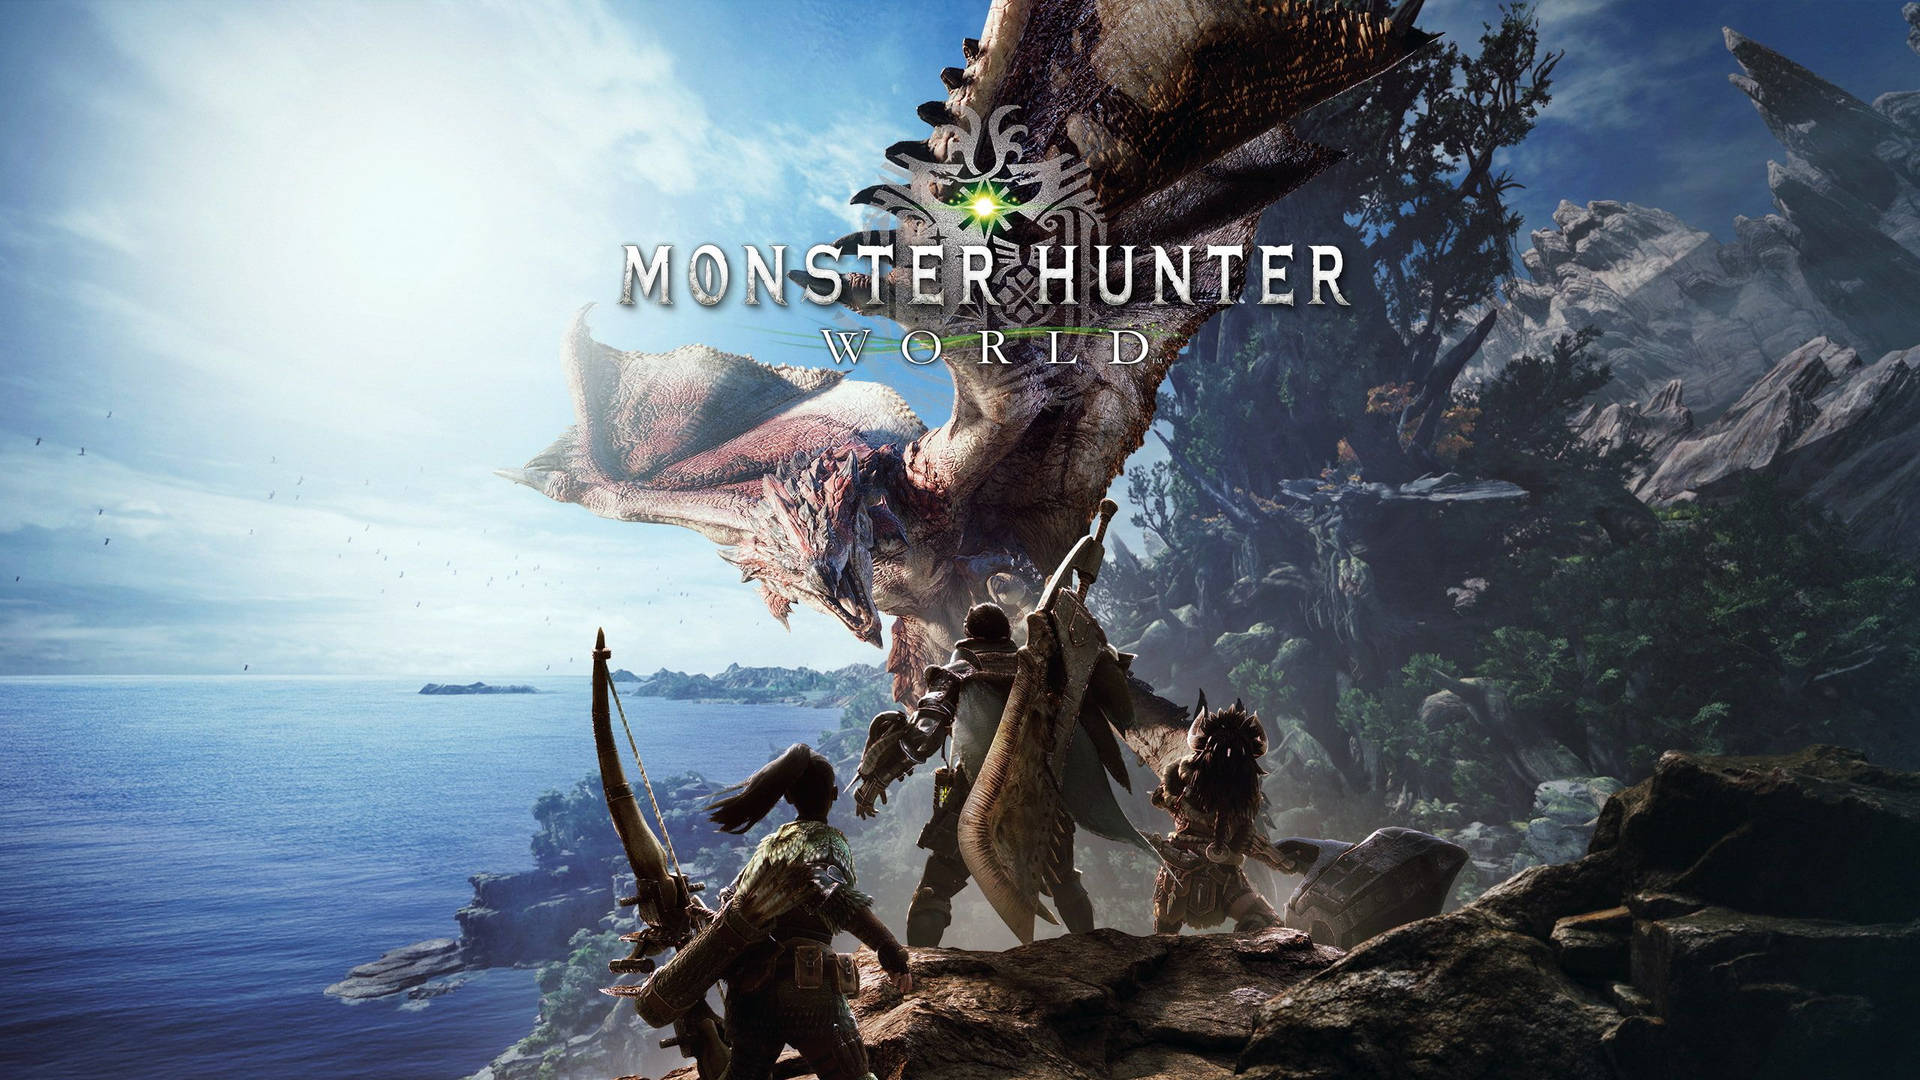 Monster Hunter World Video Game Cover Background